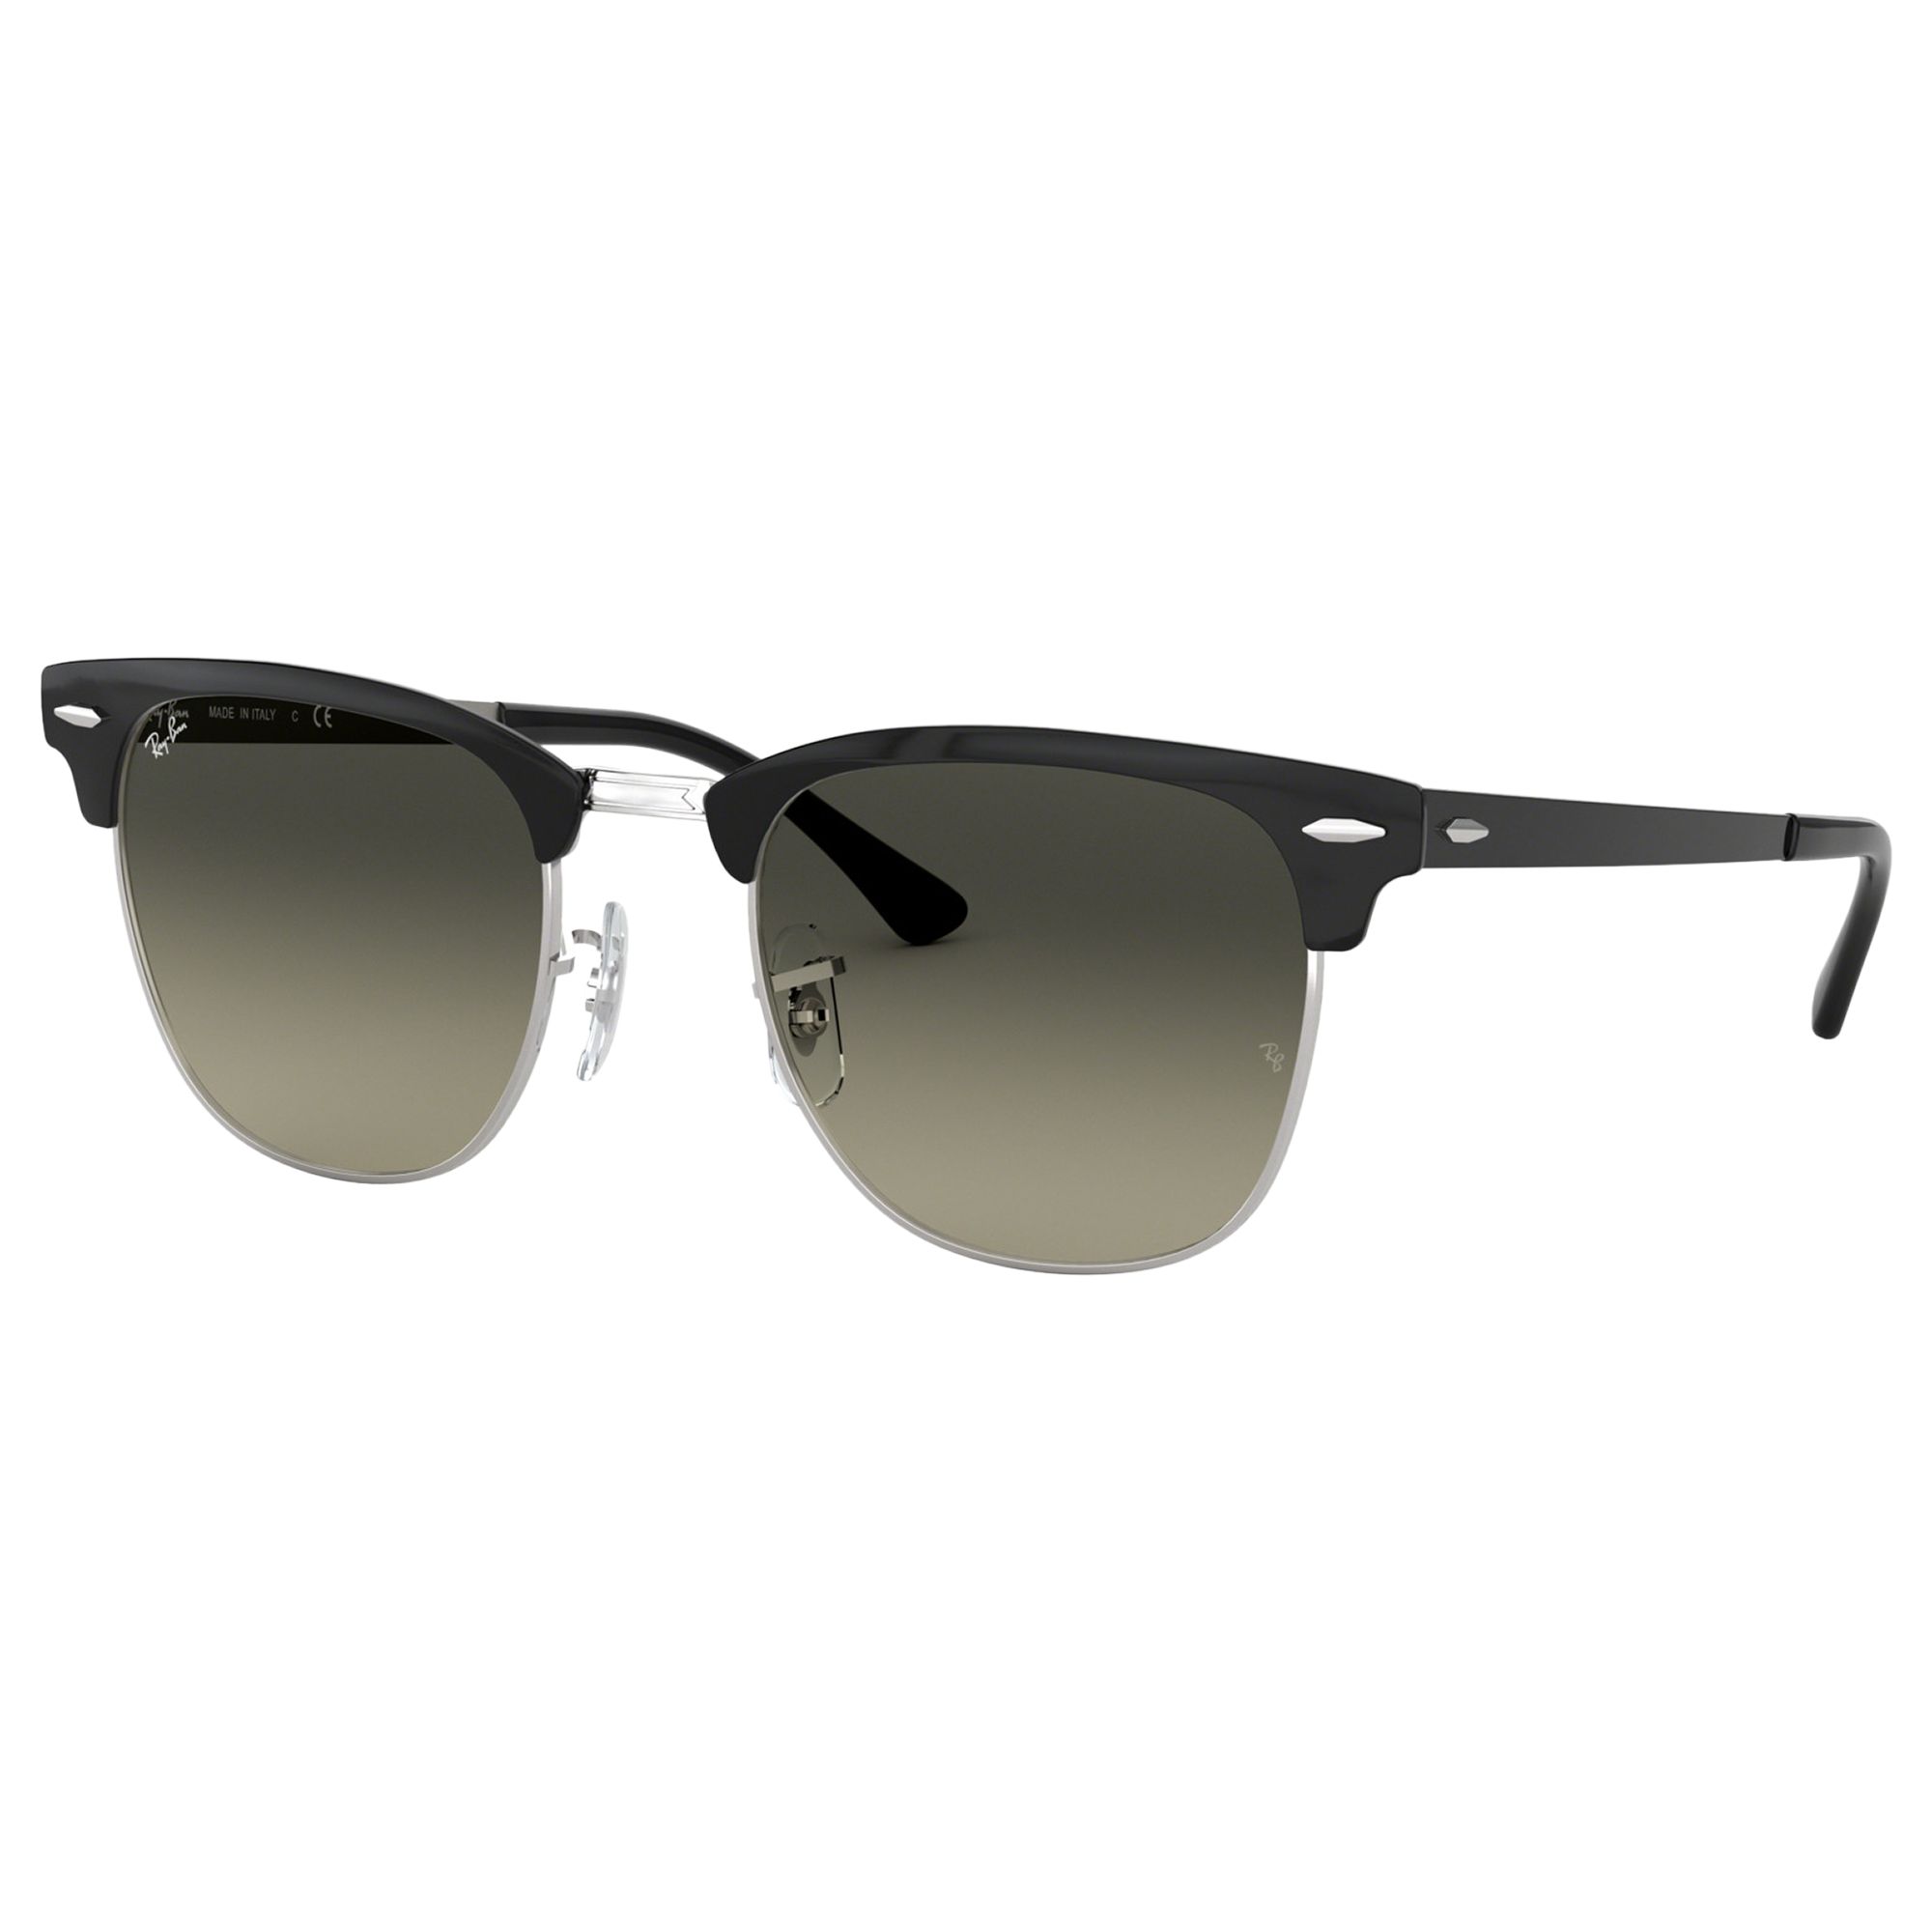 Ray-Ban RB3716 Unisex Square Sunglasses, Black/Green Gradient at John Lewis  u0026 Partners